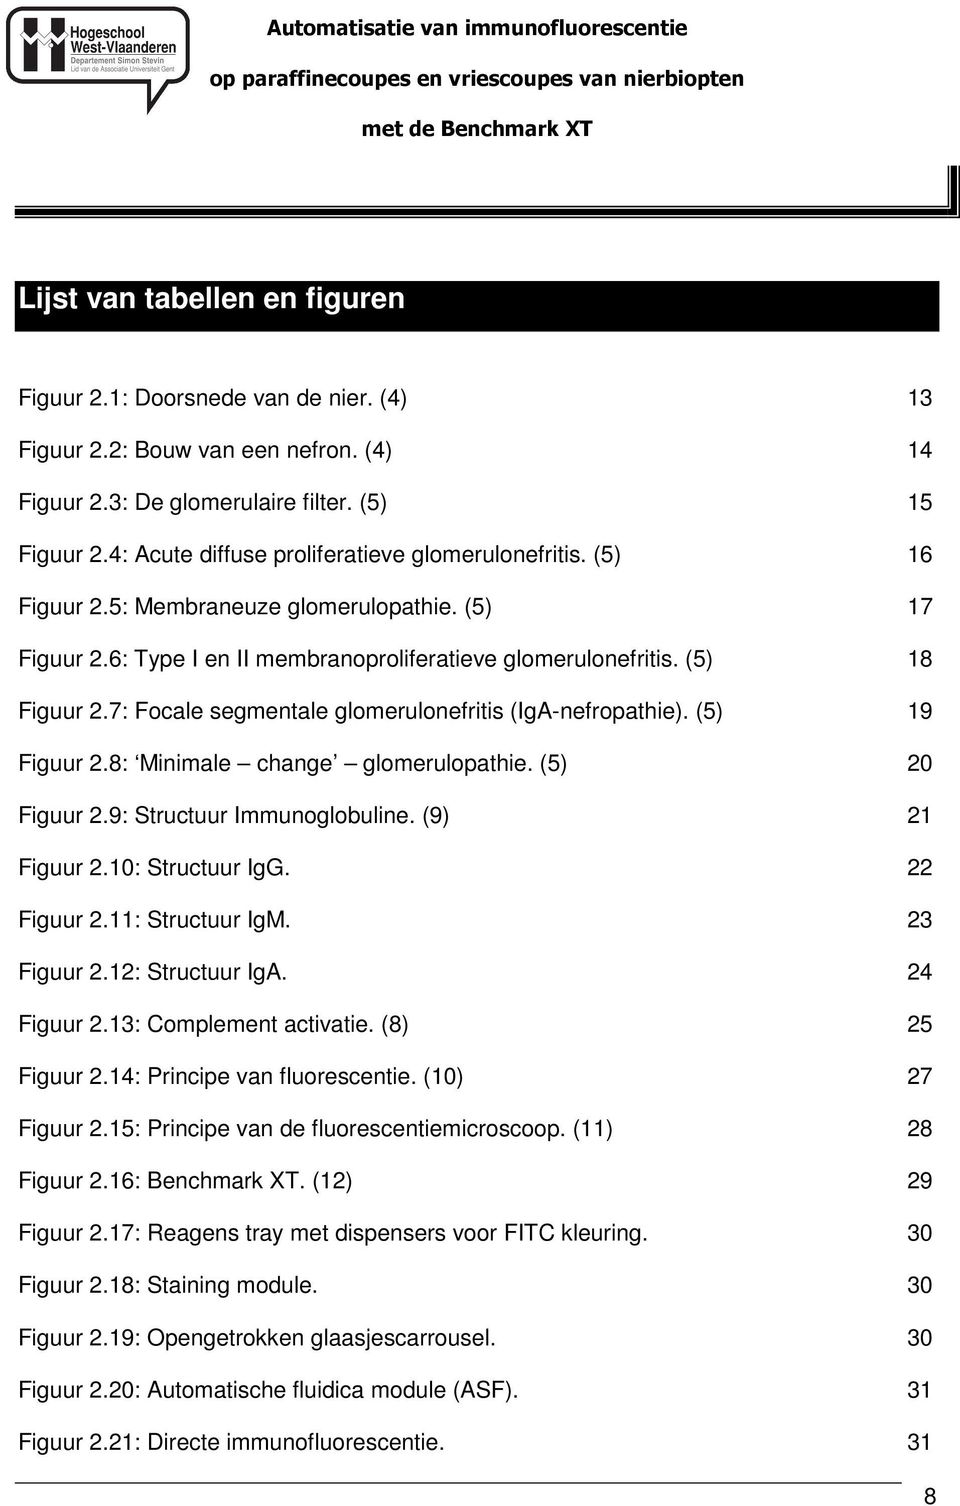 7: Focale segmentale glomerulonefritis (IgA-nefropathie). (5) 19 Figuur 2.8: Minimale change glomerulopathie. (5) 20 Figuur 2.9: Structuur Immunoglobuline. (9) 21 Figuur 2.10: Structuur IgG.